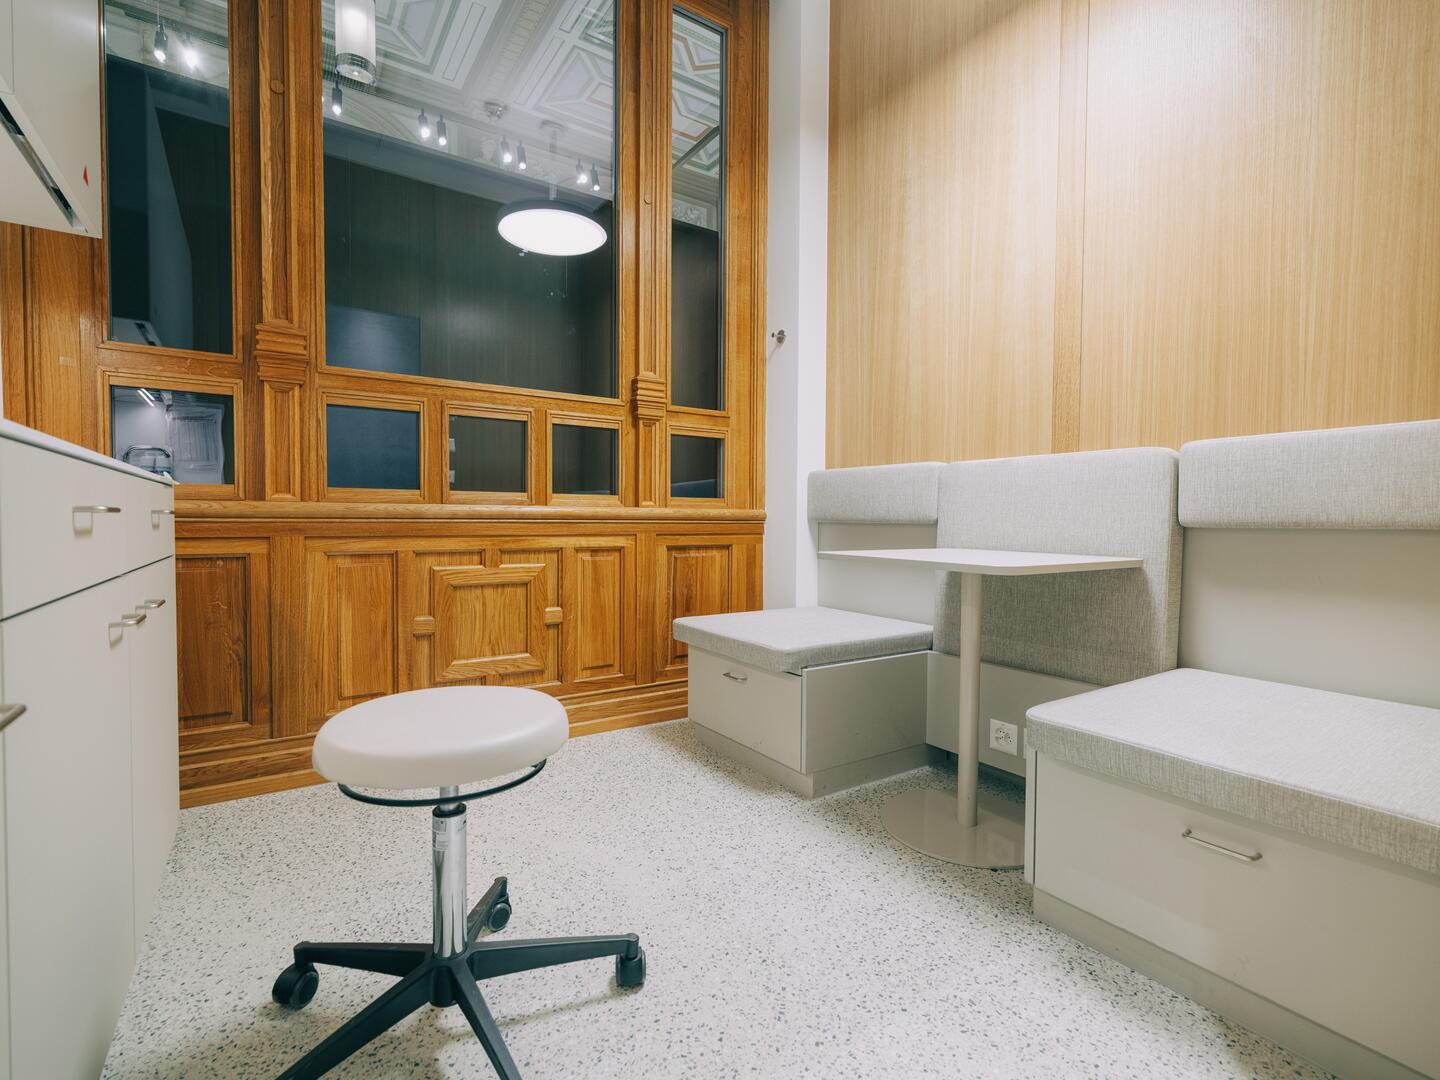 Treatment room, modern furnishings